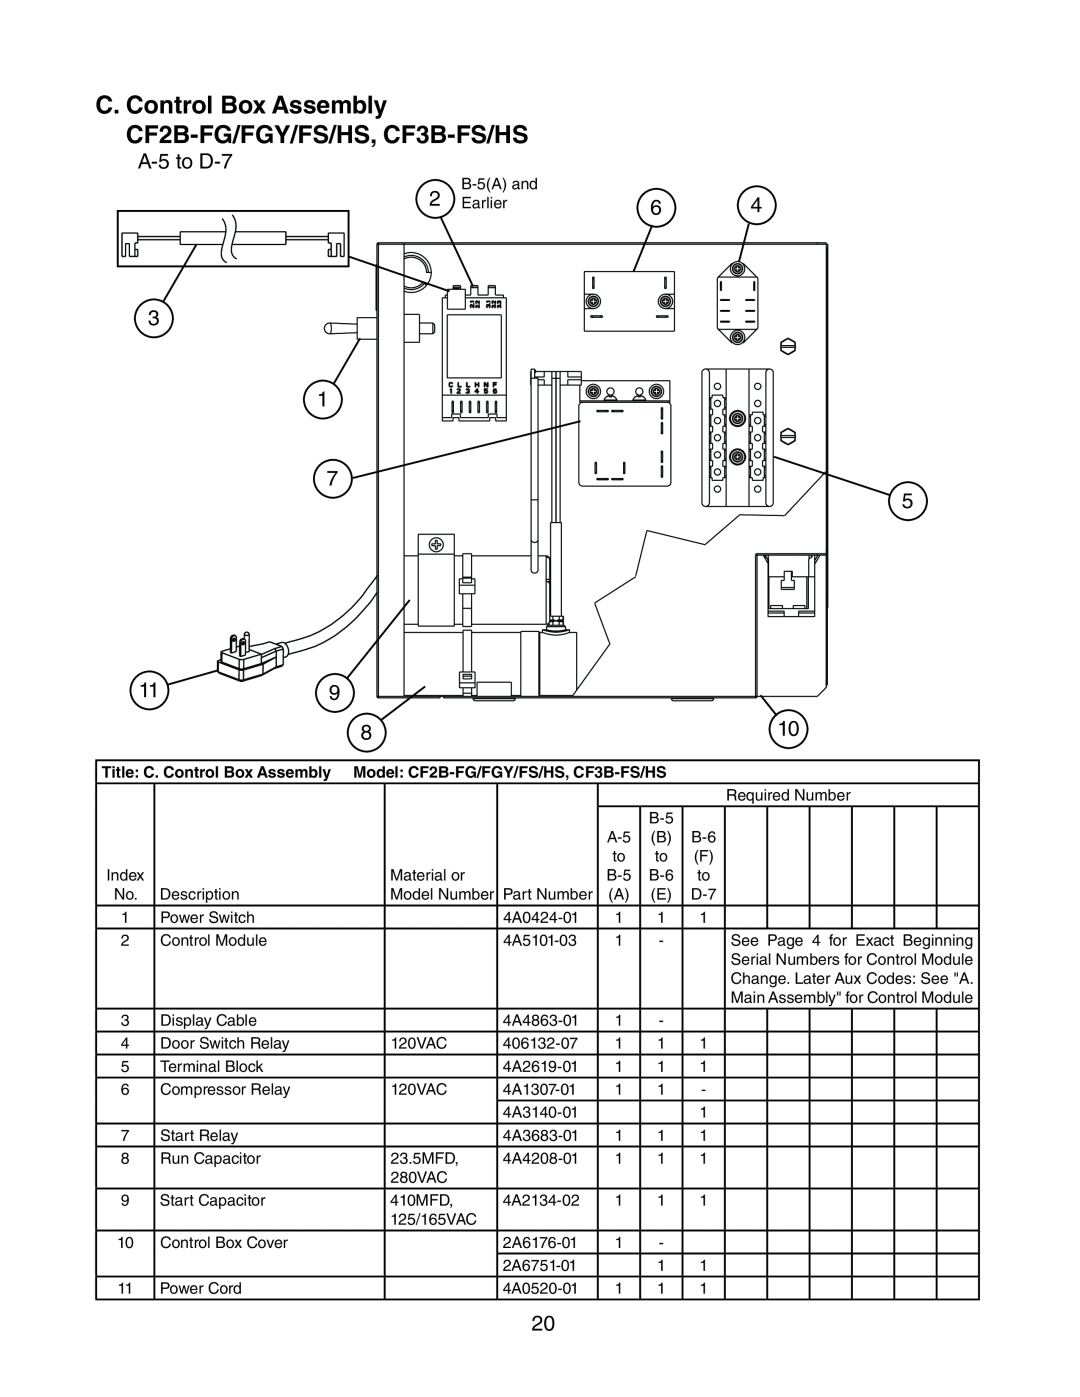 Hoshizaki CR1B-FG/FGY/FS/HS manual Title C. Control Box Assembly, Model CF2B-FG/FGY/FS/HS, CF3B-FS/HS 